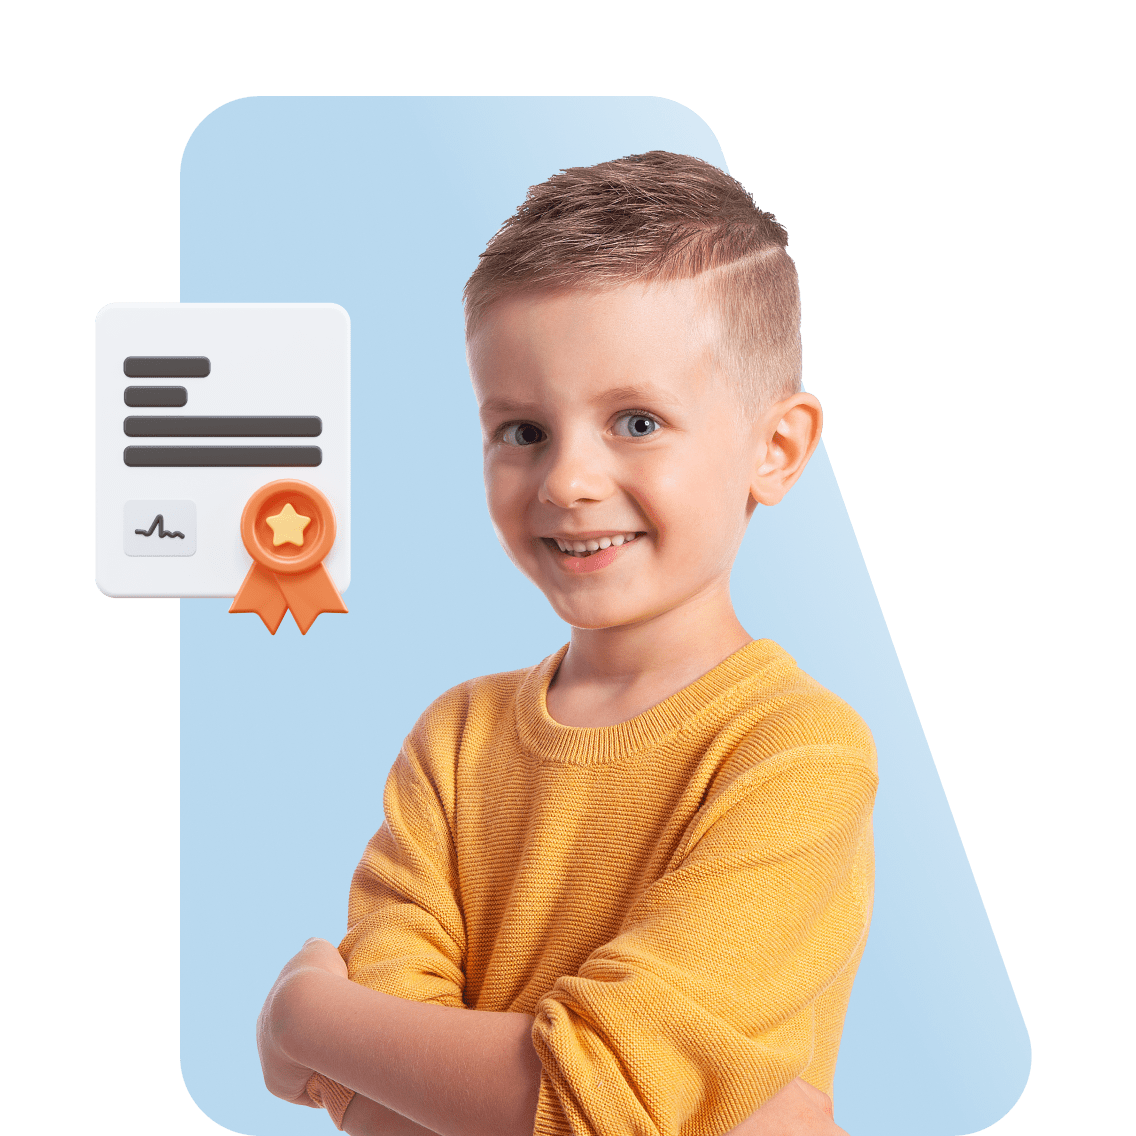 Ohio online schools image 1 (name 1 Young Boy Yellow Shirt Certificate 1)